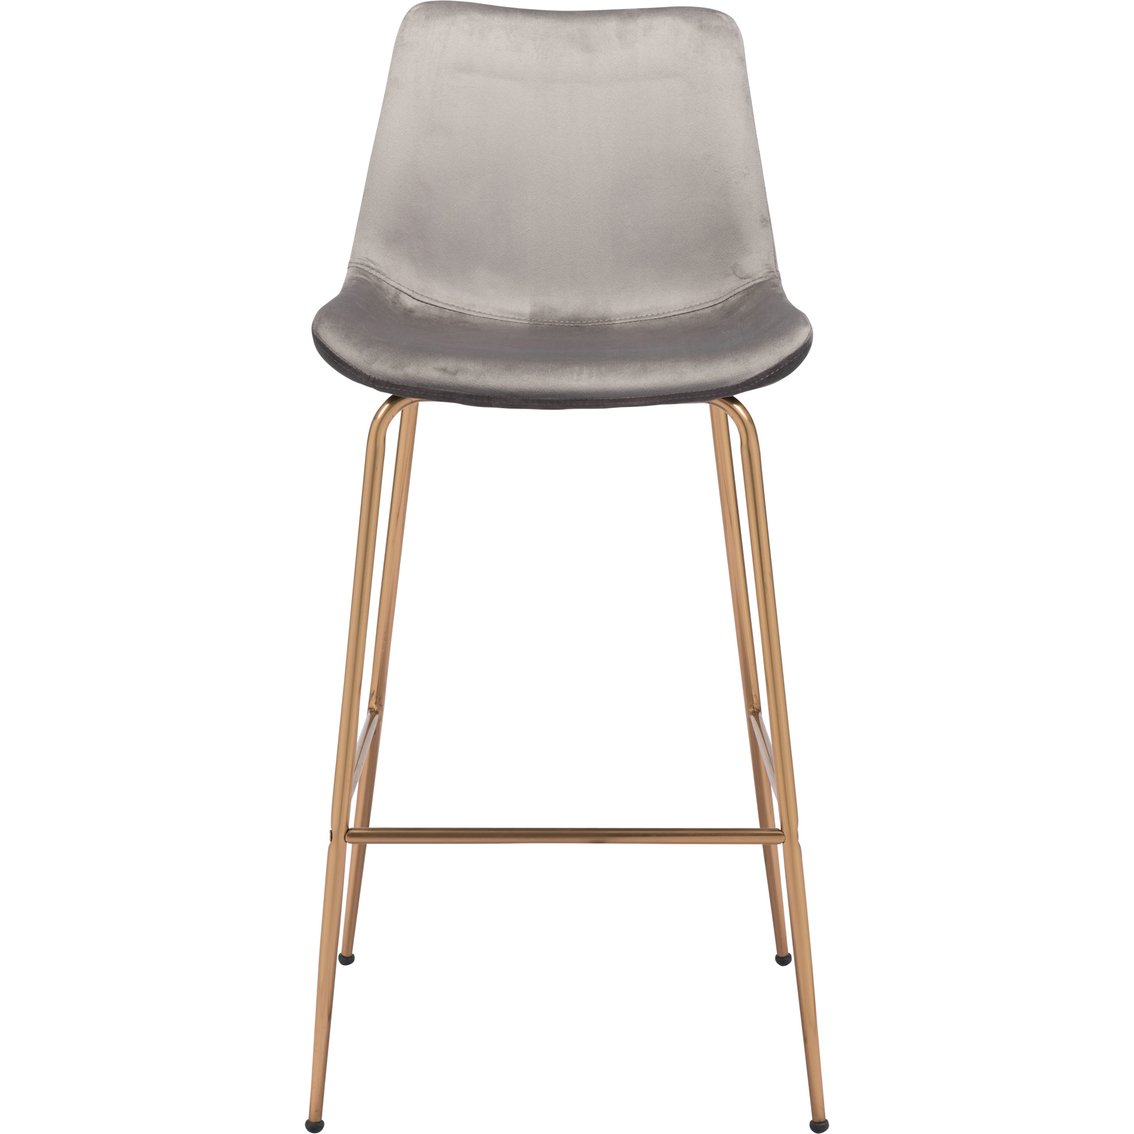 Zuo Modern Tony Bar Chair - Image 3 of 10